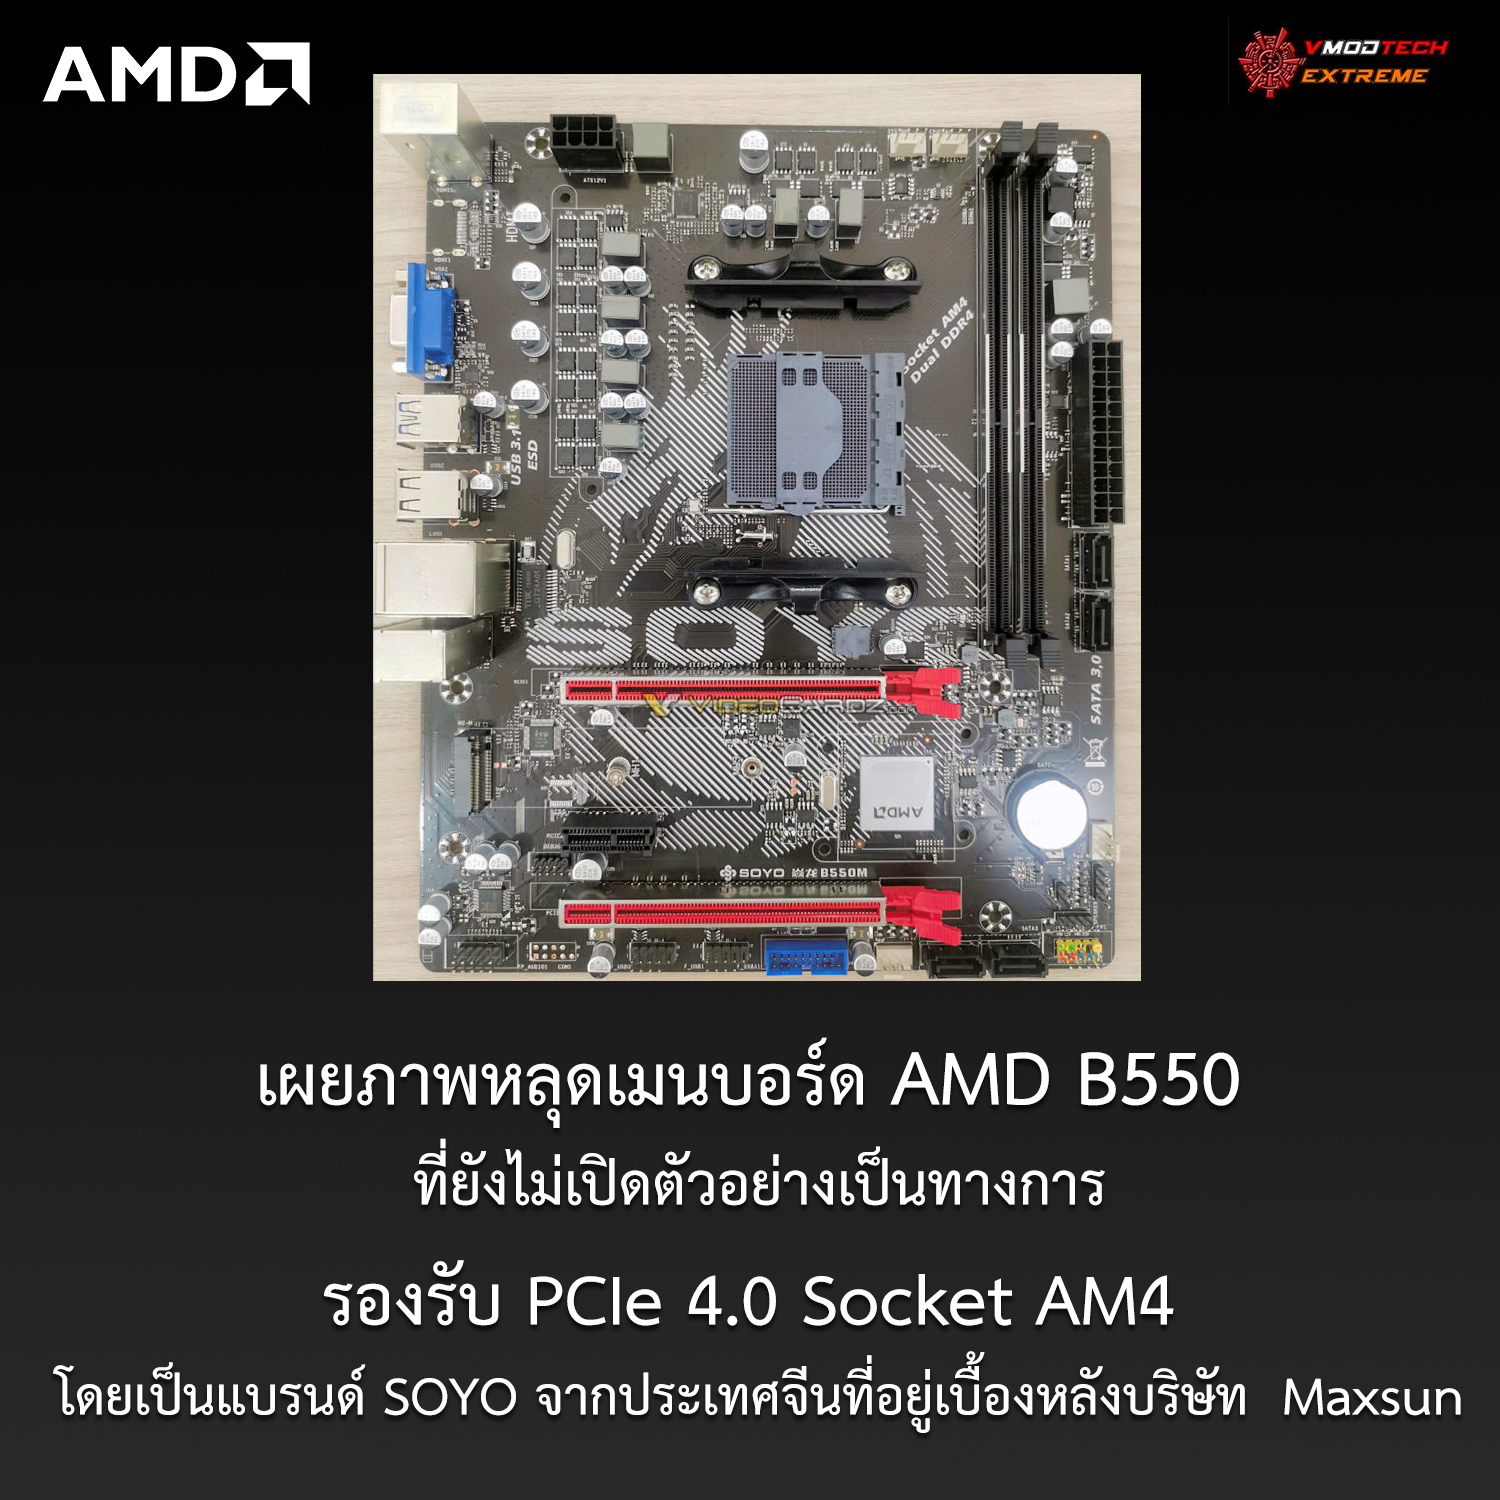 amd b5501 เผยภาพหลุดเมนบอร์ด AMD B550 รุ่นใหม่ล่าสุดที่ยังไม่เปิดตัวอย่างเป็นทางการ 